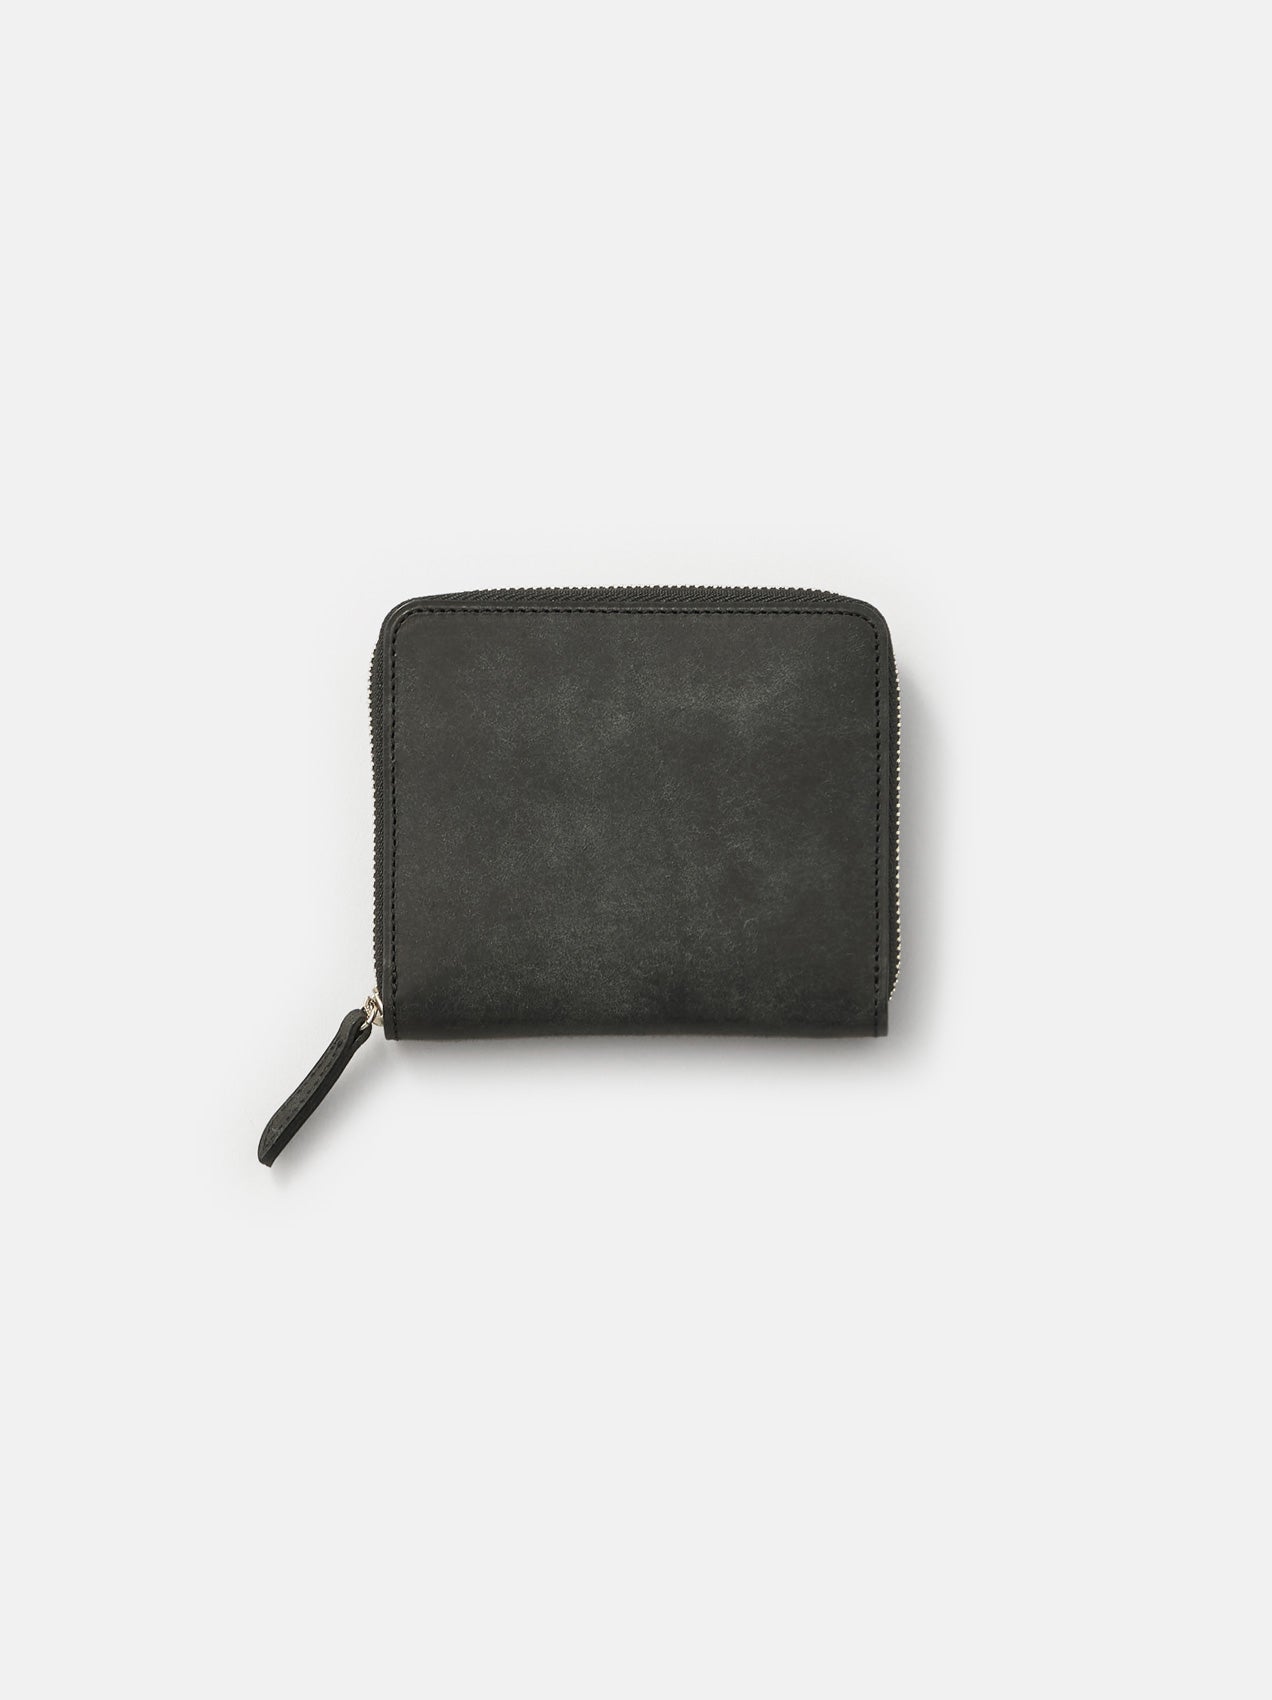 Mini zipper wallet – ARTS&SCIENCE ONLINE SELLER